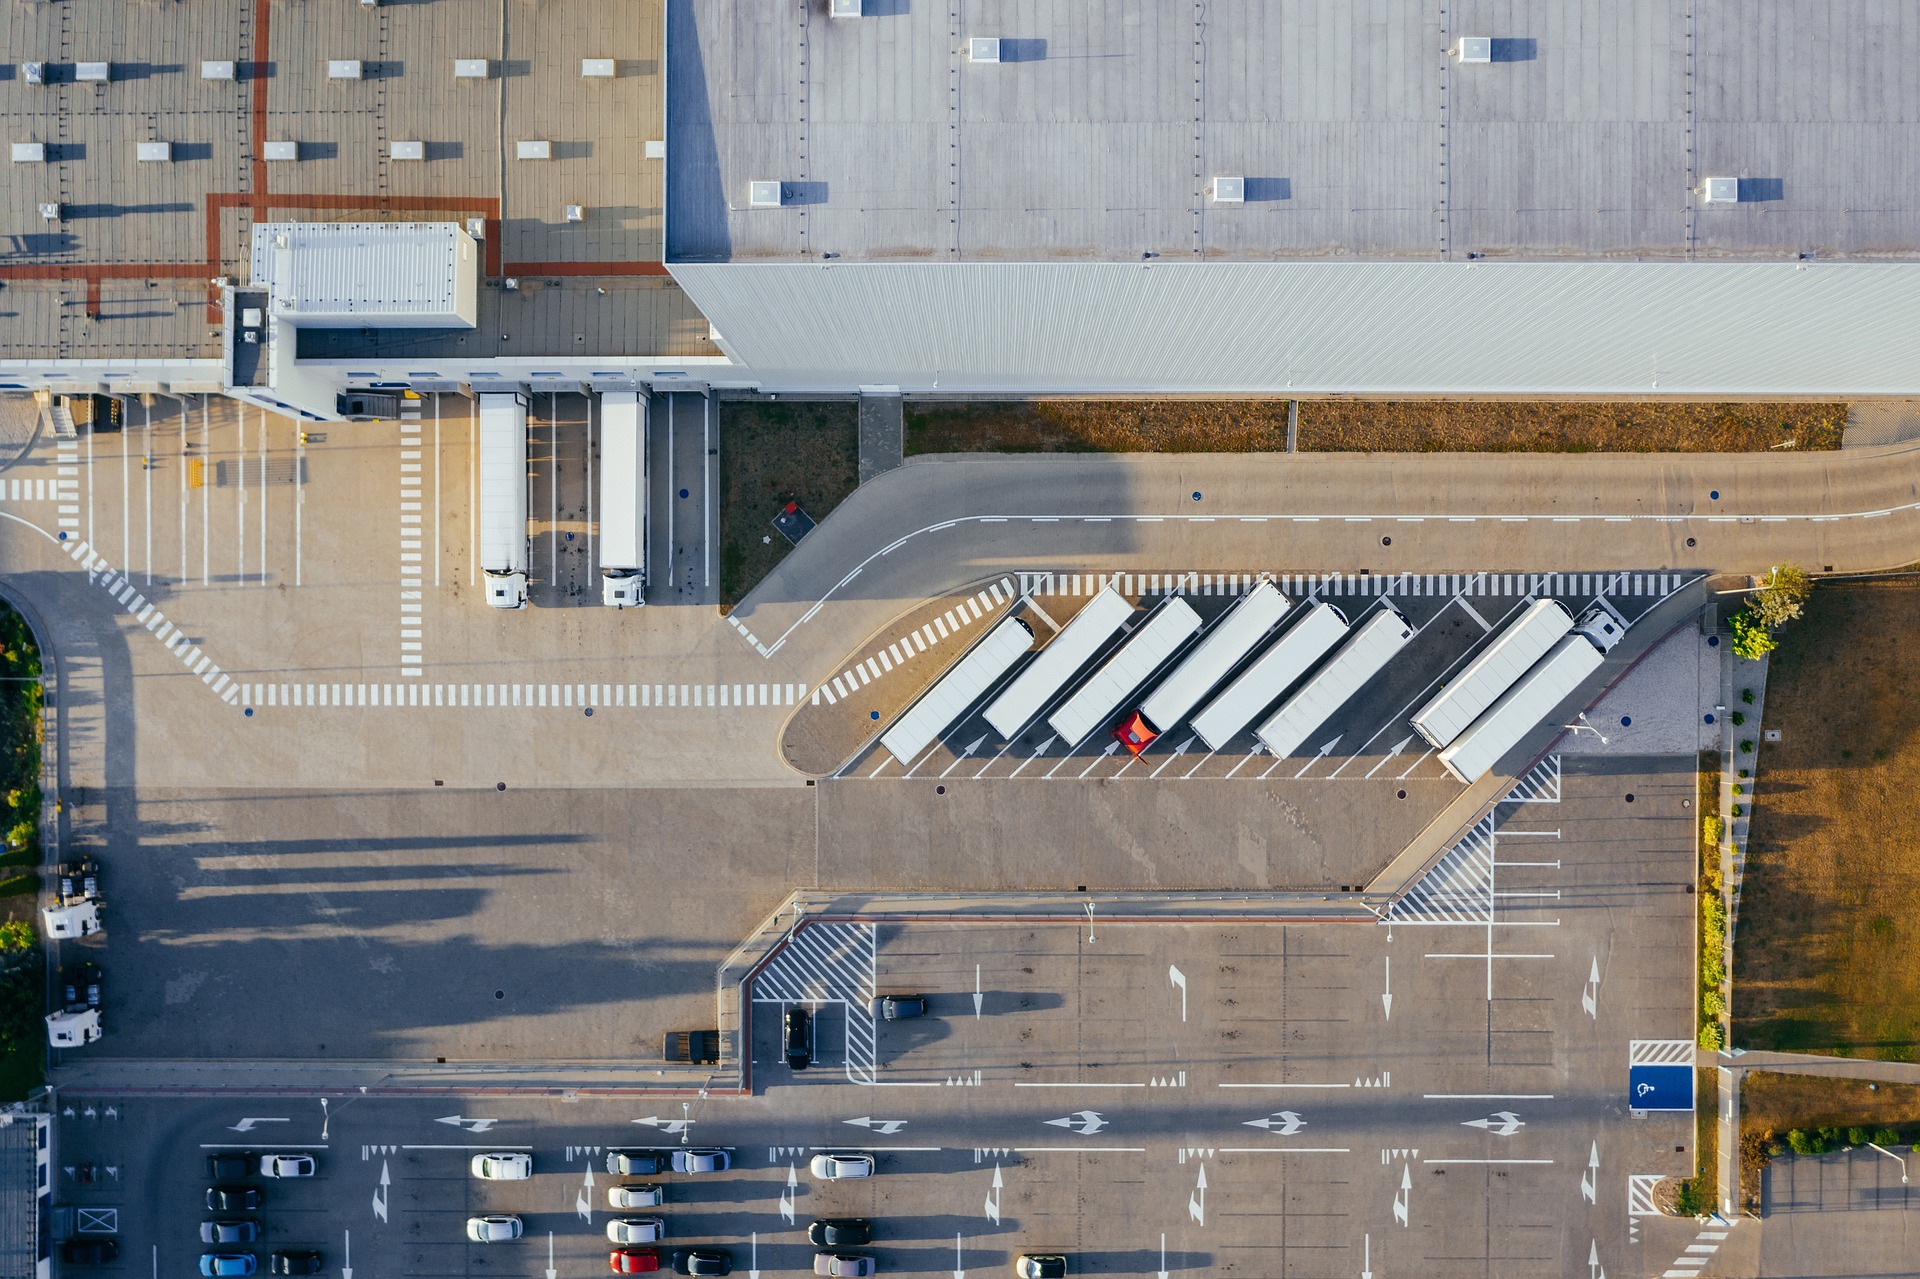 distribution center parking lot